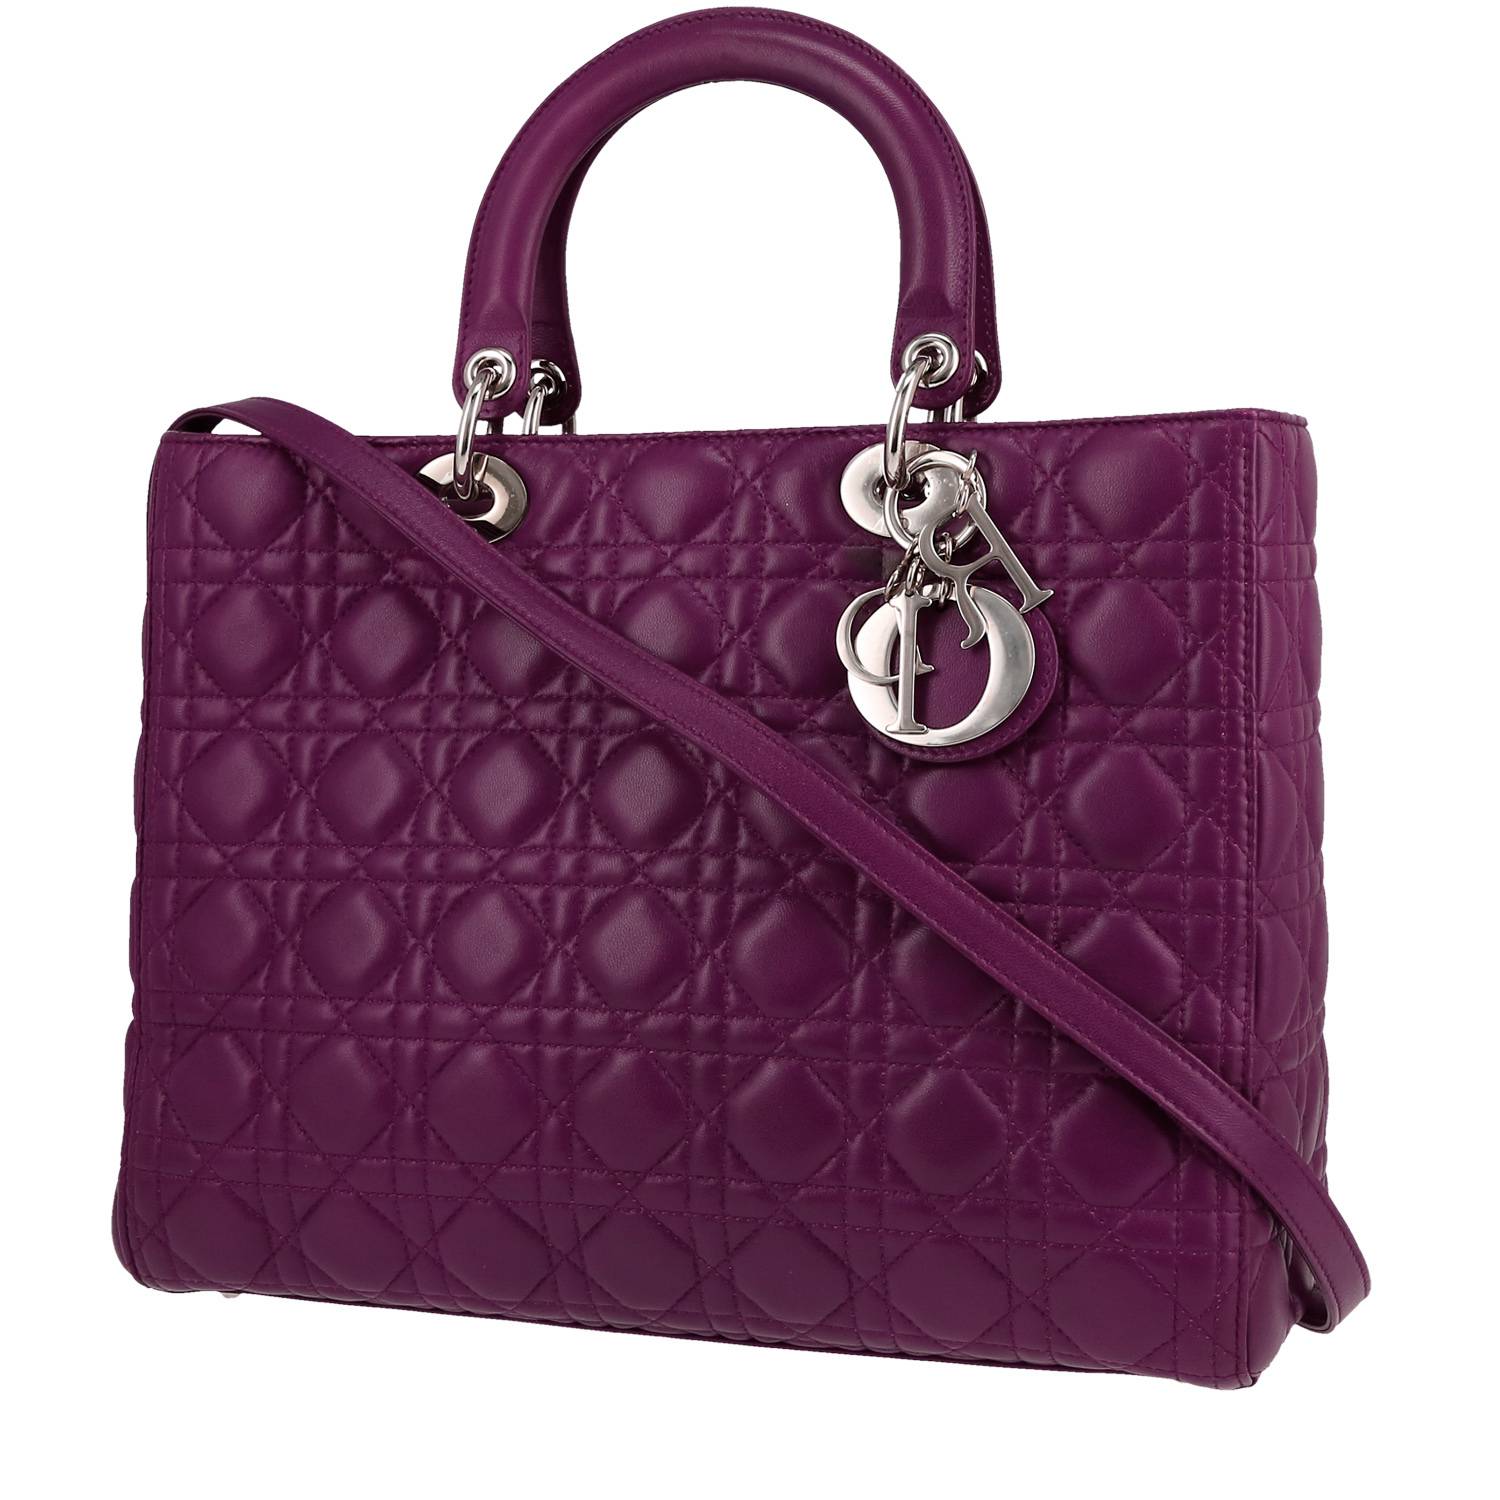 sac à main dior lady dior grand modèle en cuir cannage violet